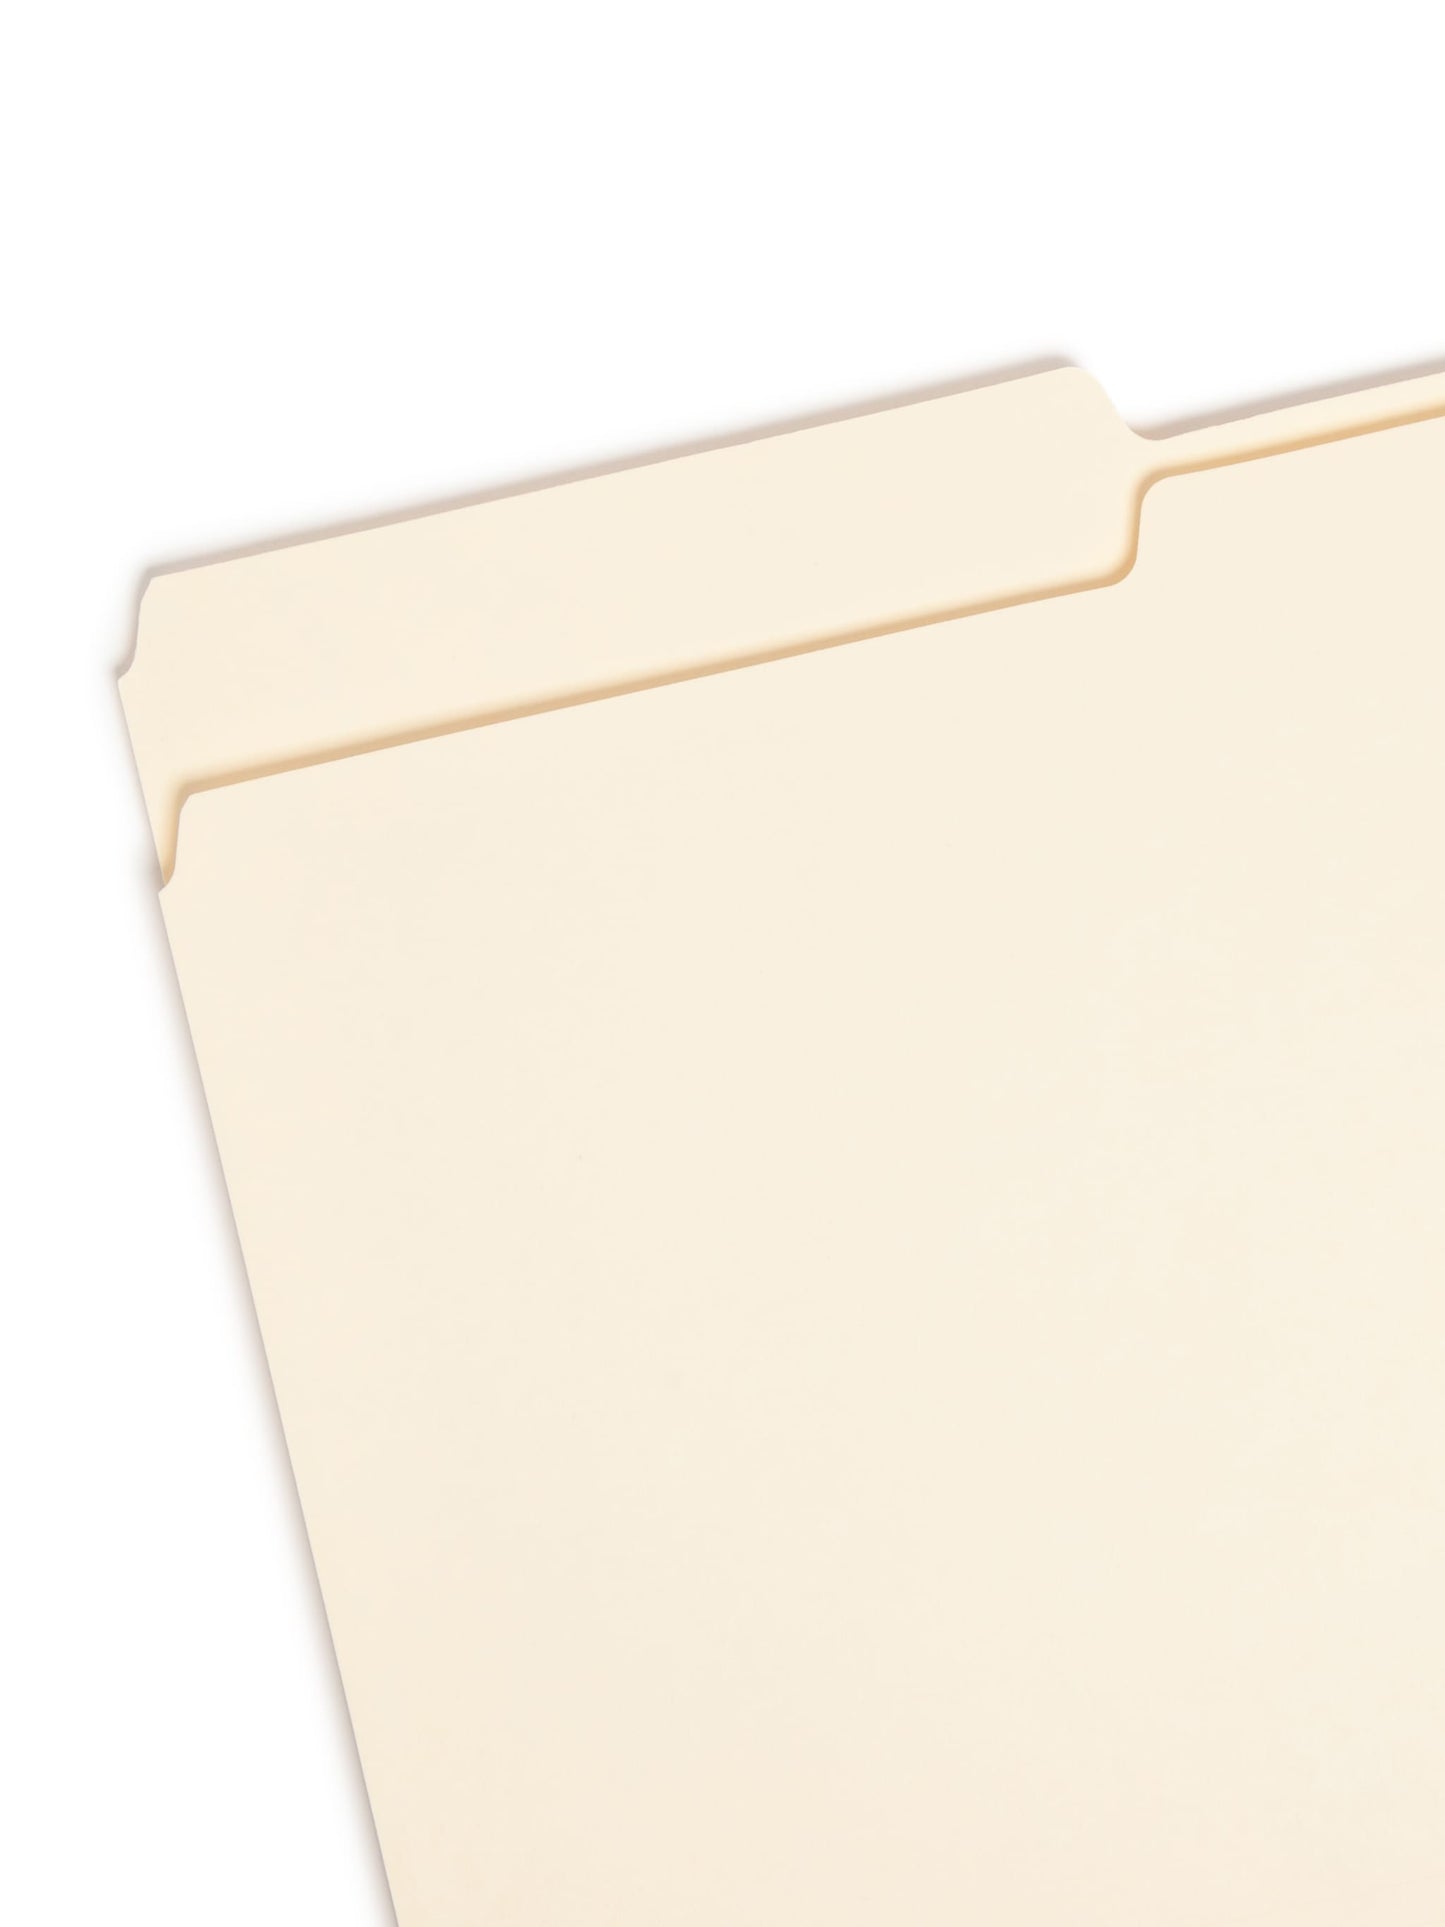 Standard File Folders, 1/2-Cut Tab, Manila Color, Letter Size, Set of 100, 086486103206